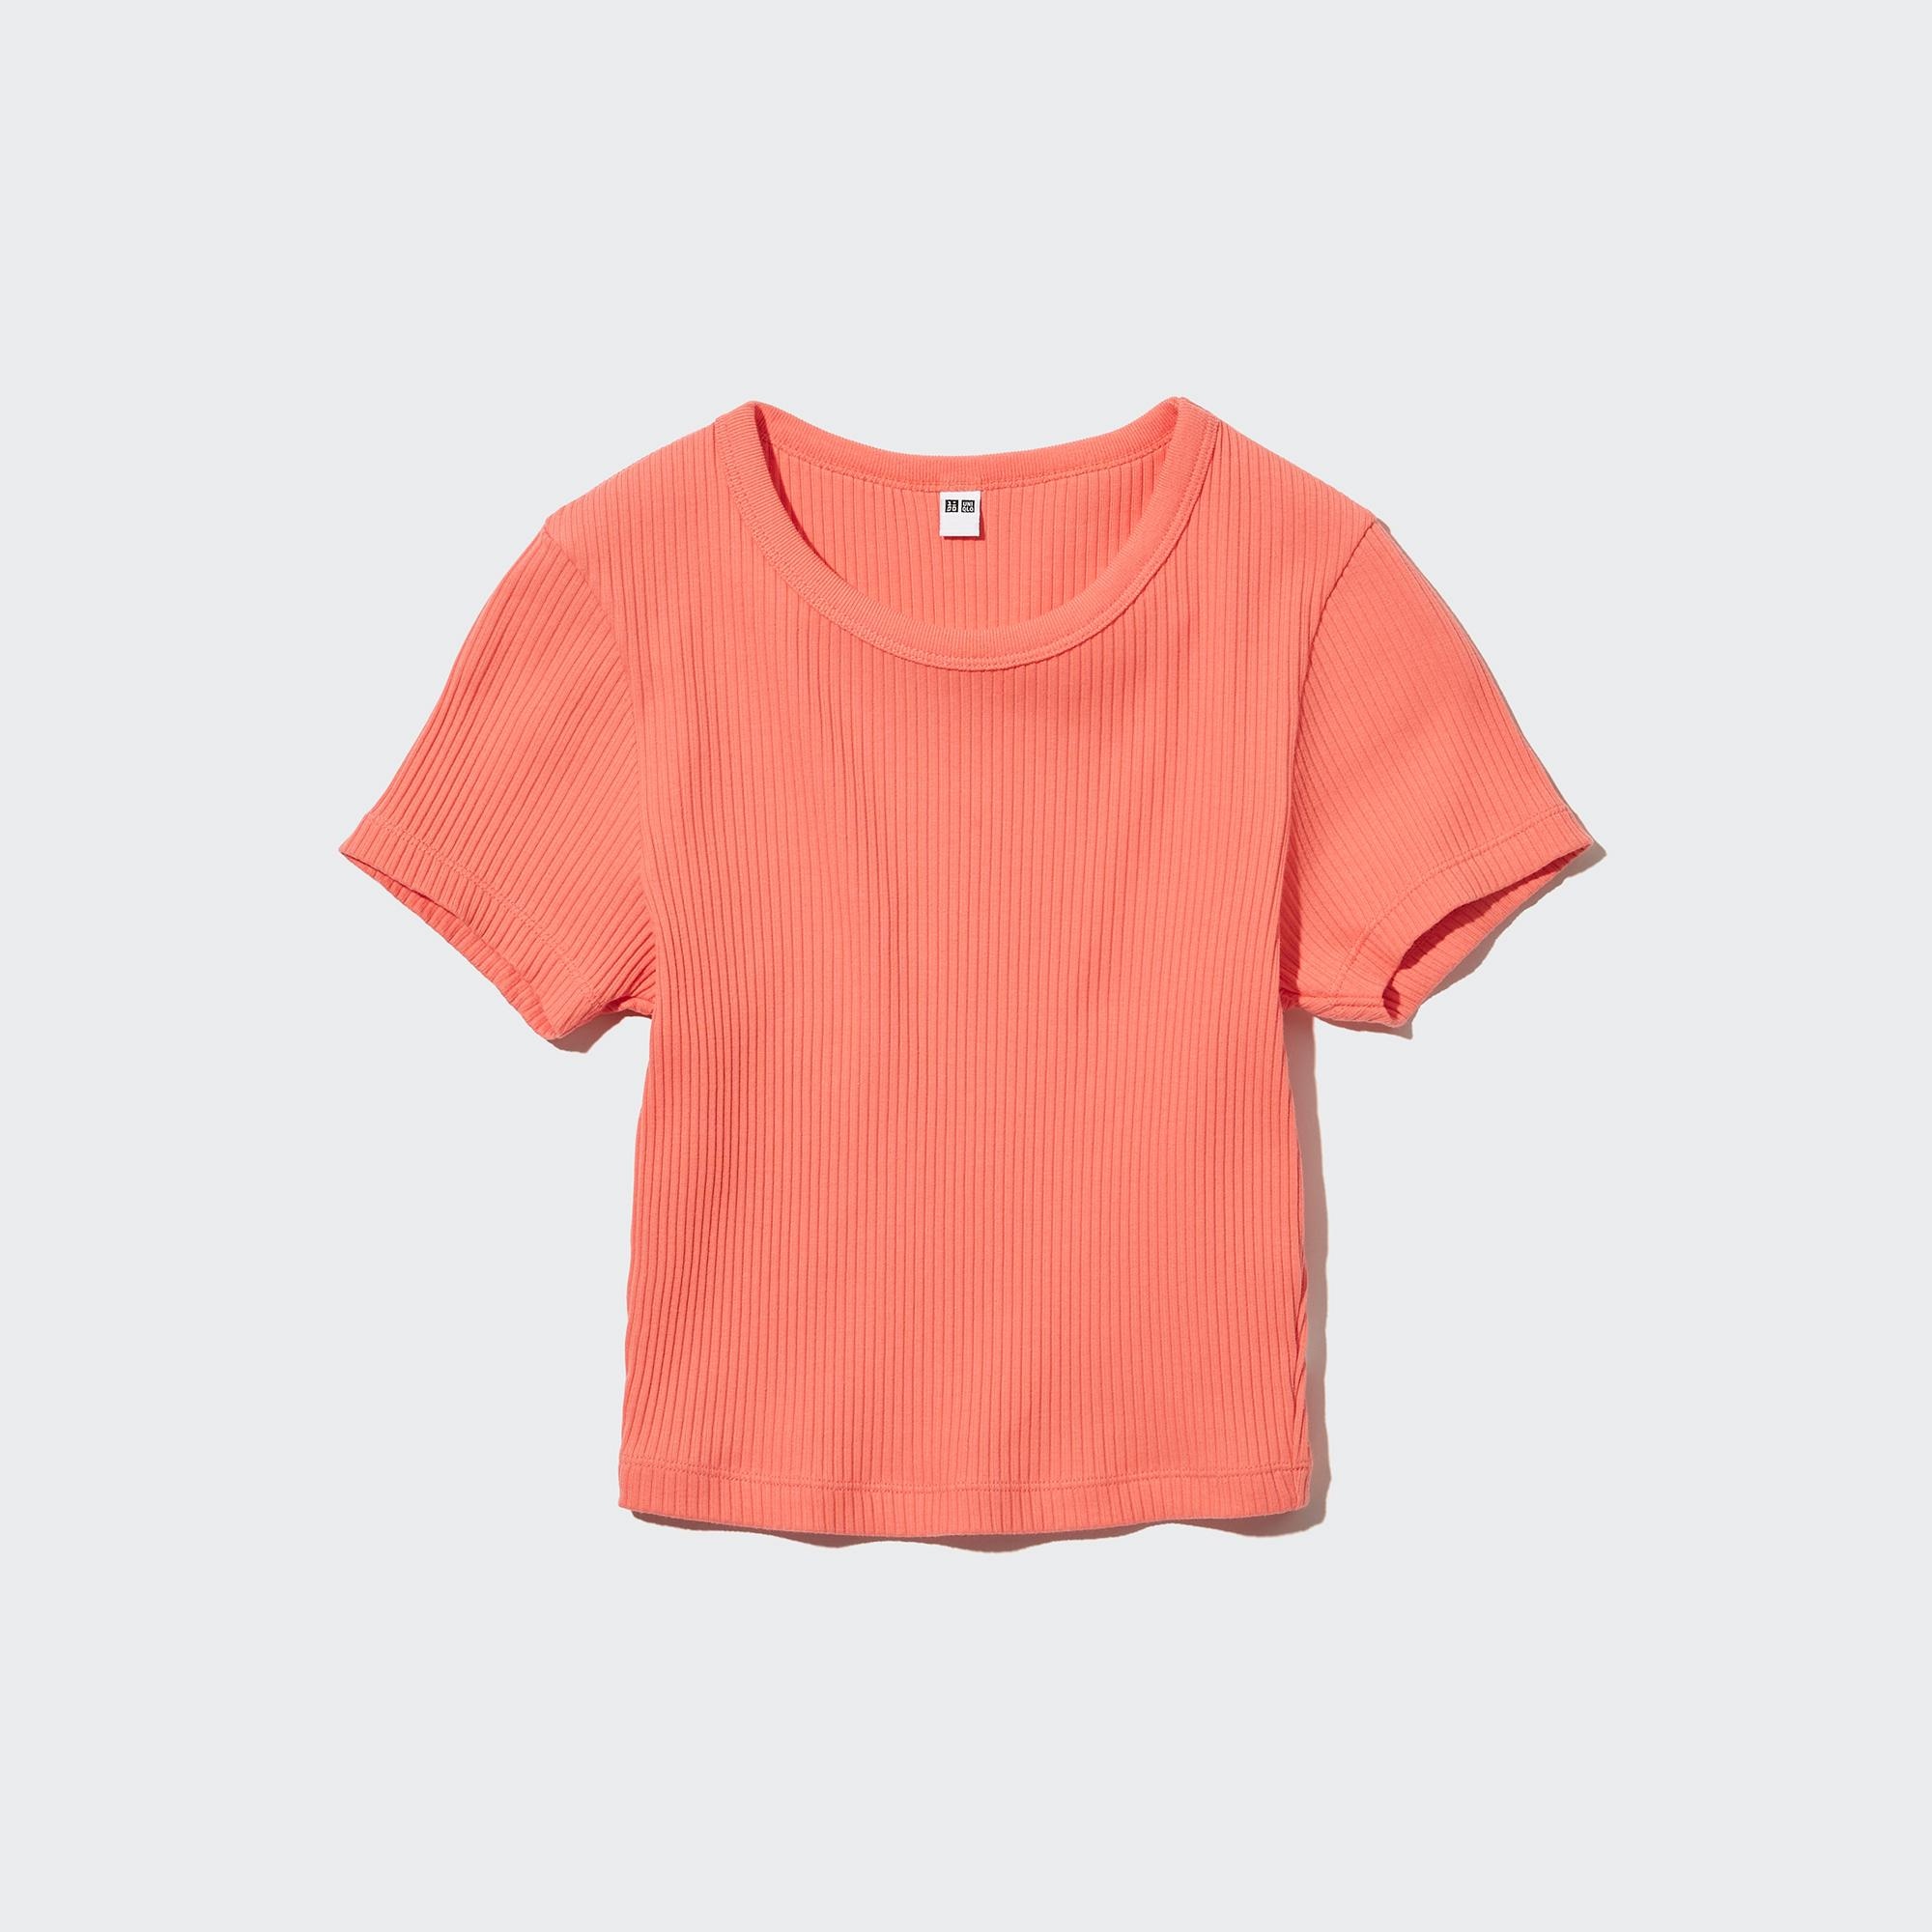 Uniqlo Singapore - WOMEN HEATTECH Extra Warm Turtle Neck Long Sleeve  T-Shirt $19.90 (U.P. $24.90) Shop now